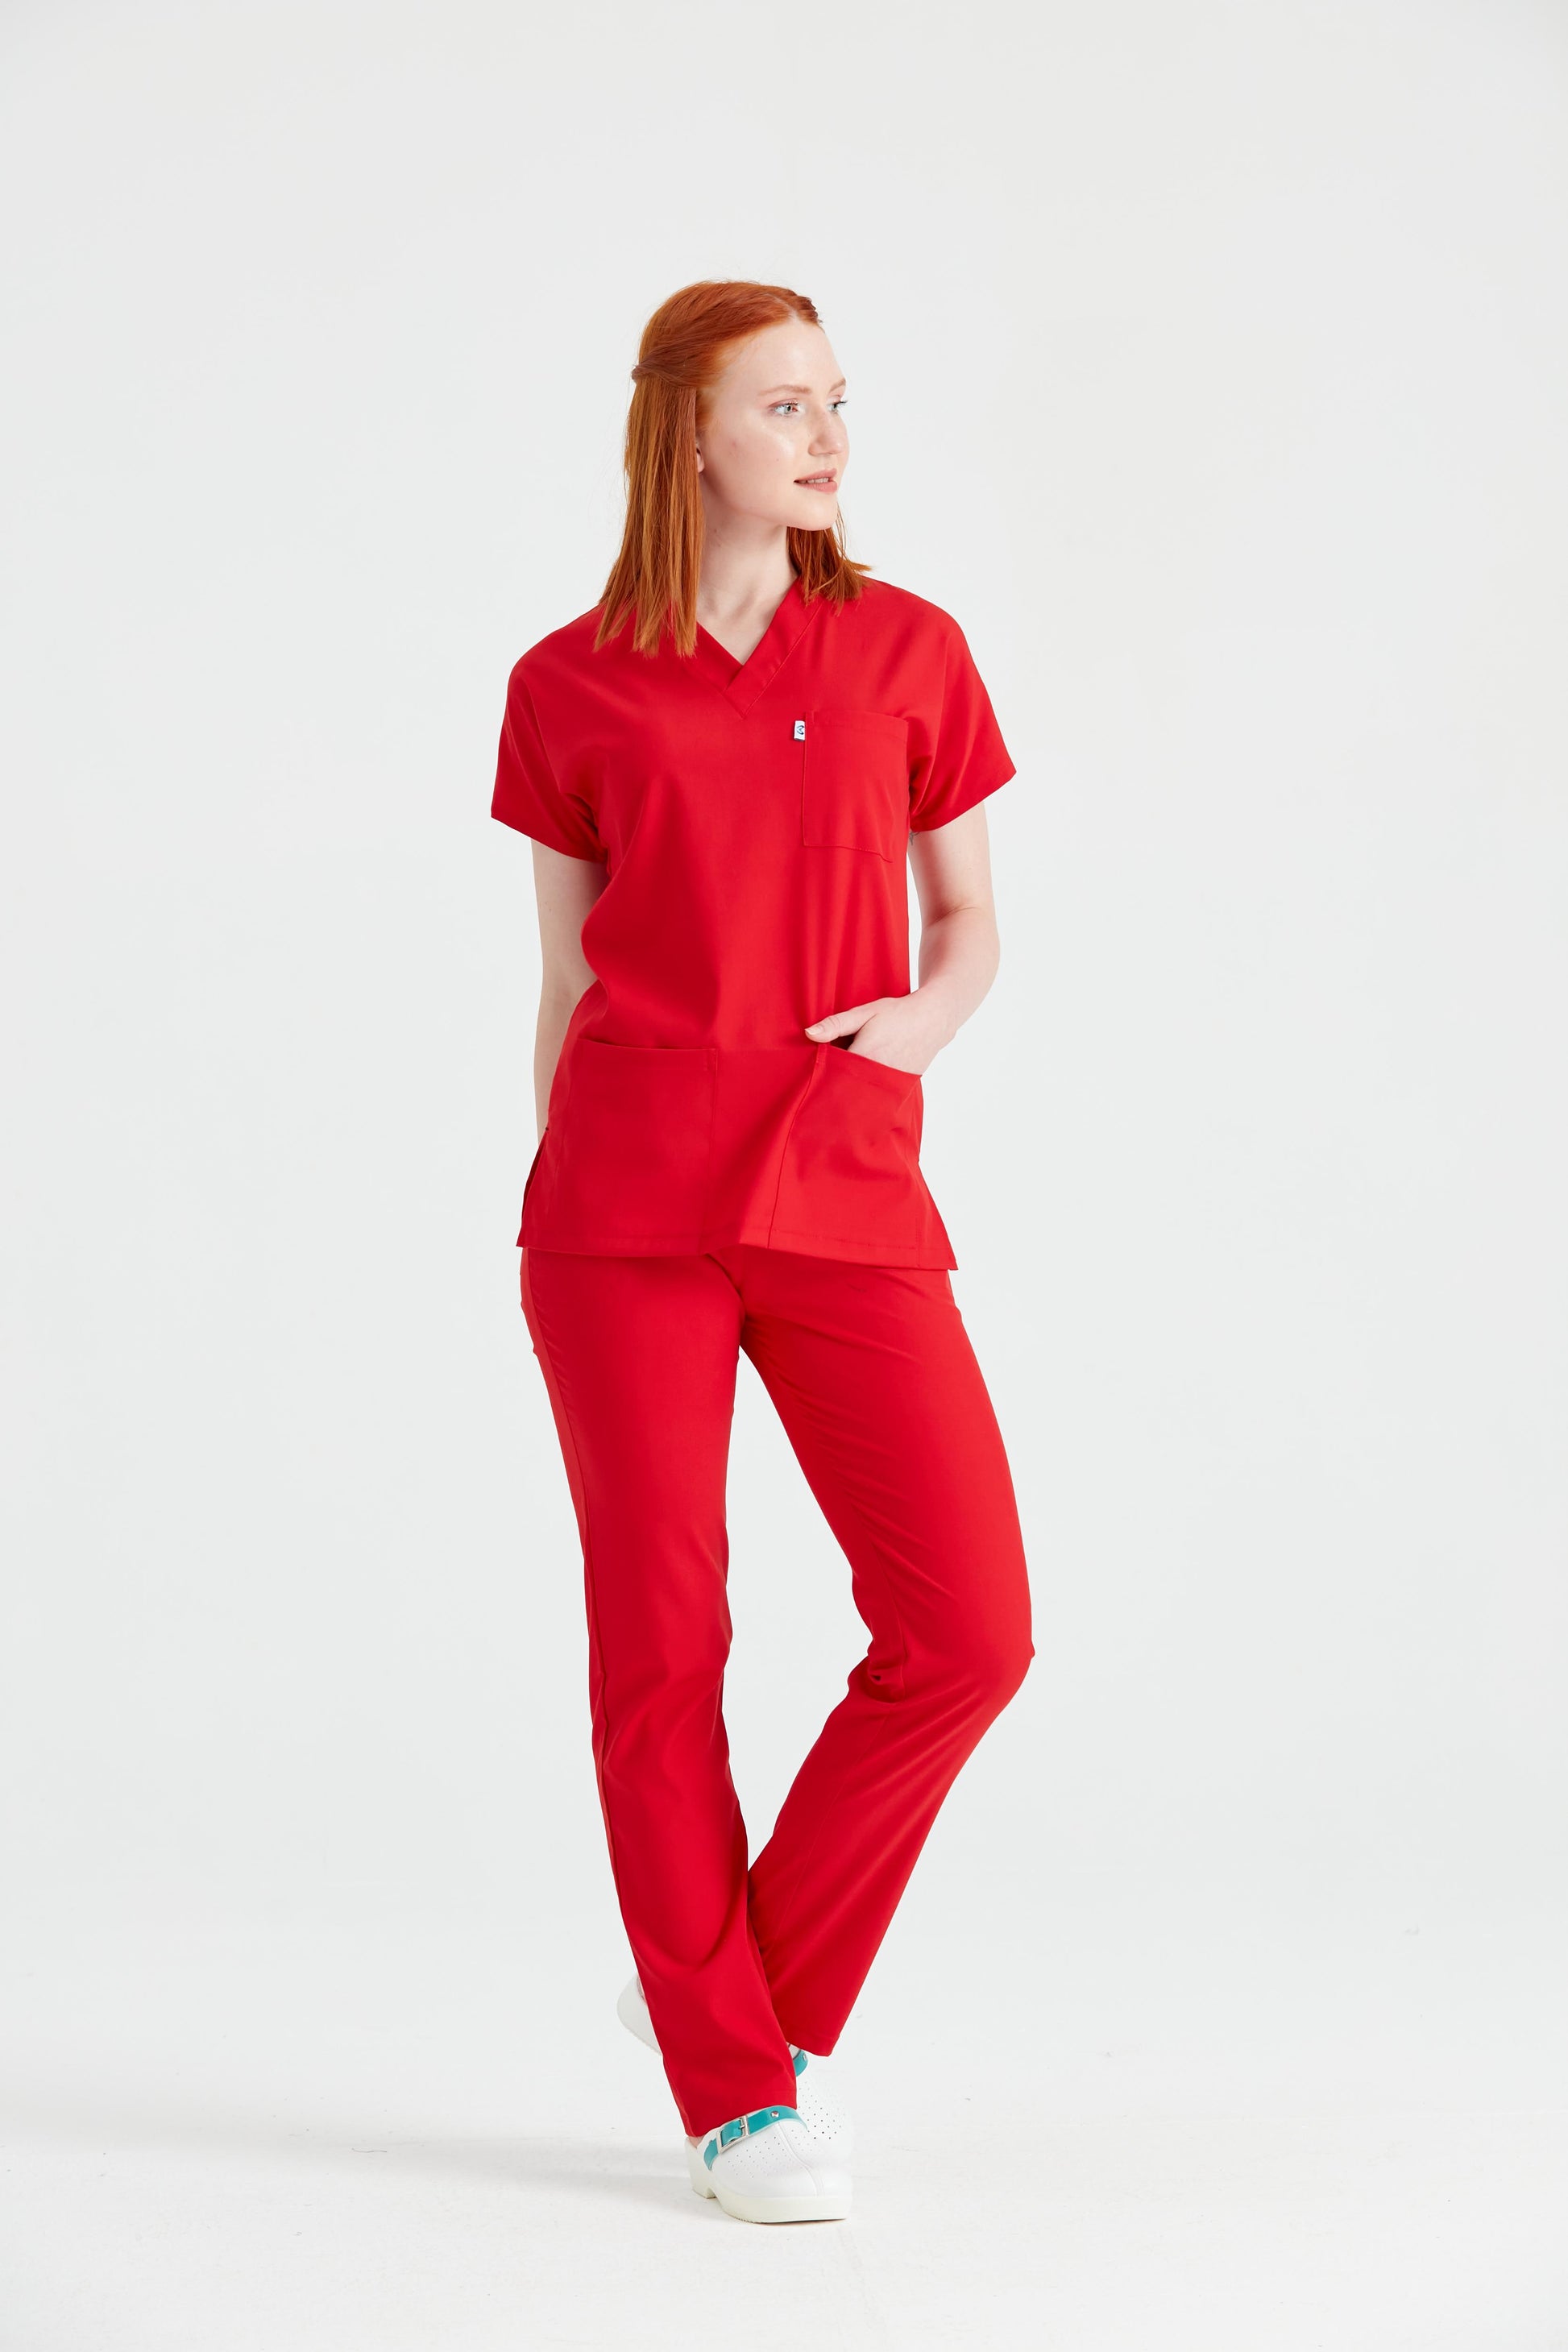 Asistenta medicala imbracata in costum medical de dama din elastan, rosu - red, vedere din profil